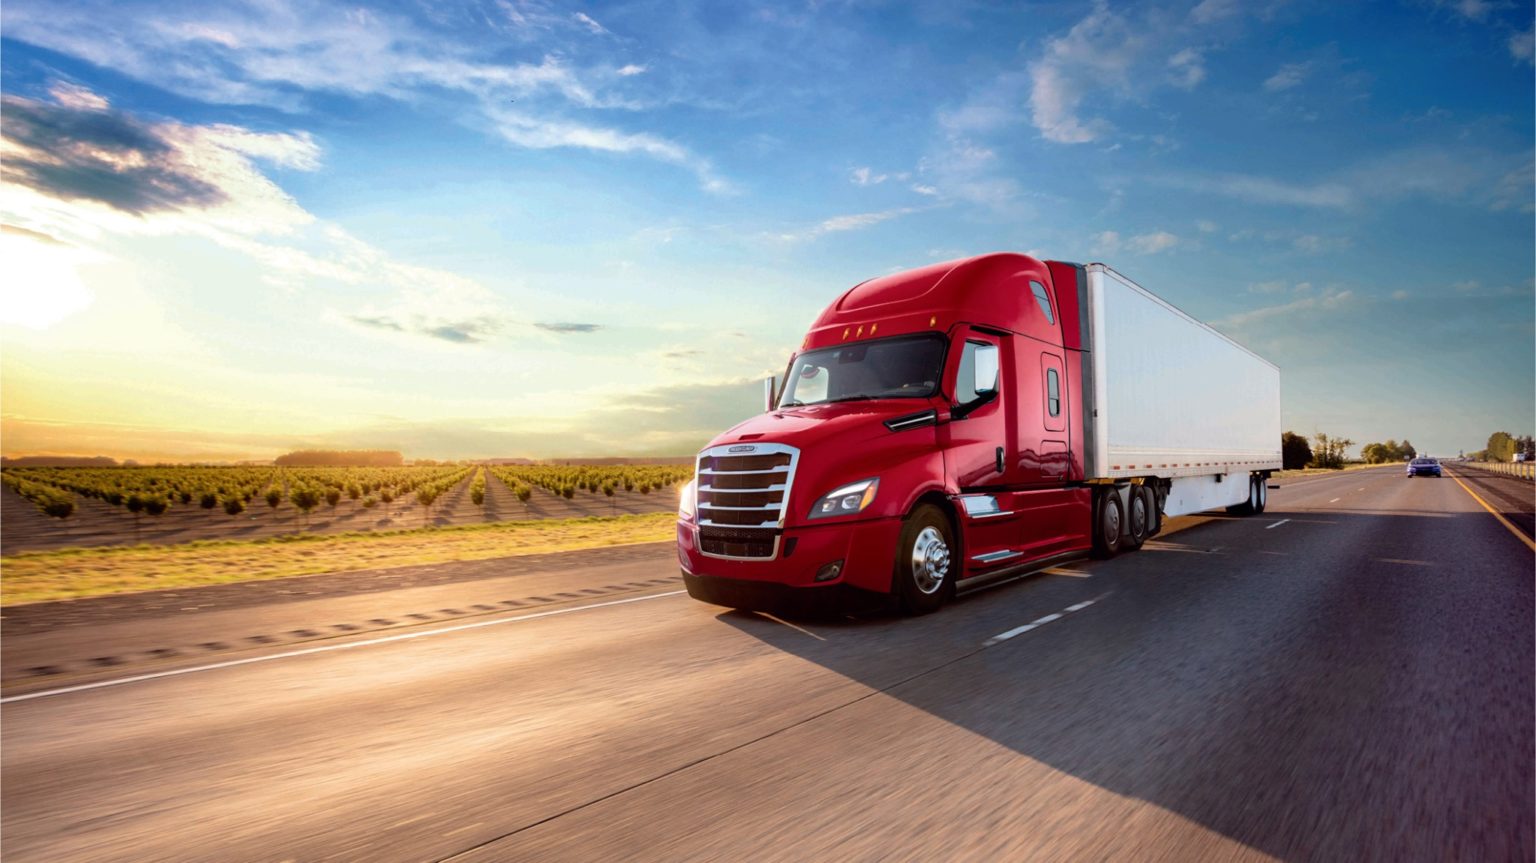 California Trucking Laws & Regulations